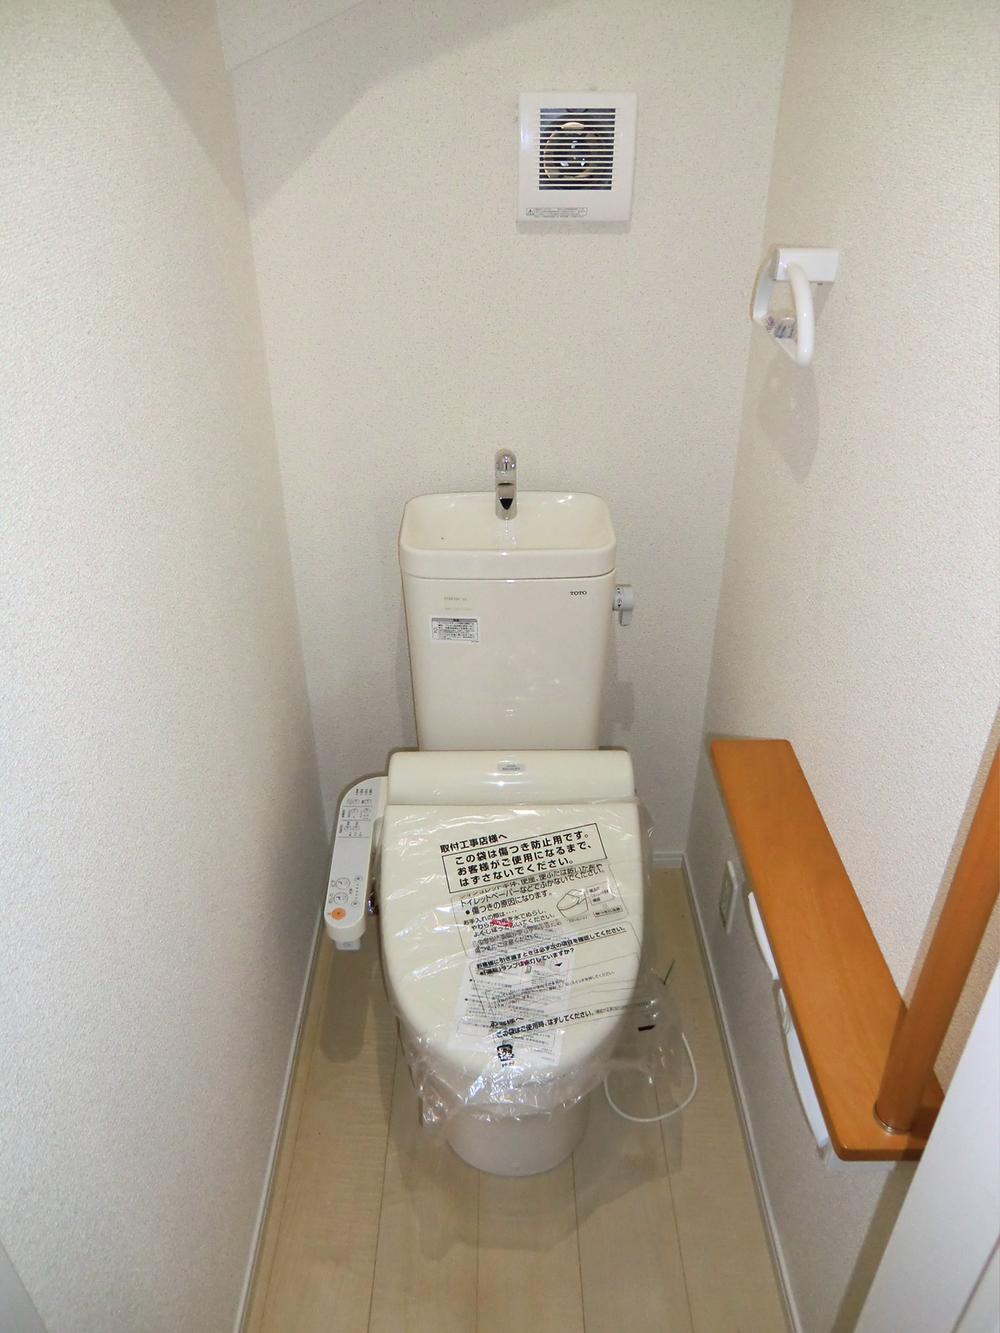 Toilet. ◇ toilet ◇  1st floor ・ Second floor Bidet  With auto-off function   LED lighting 